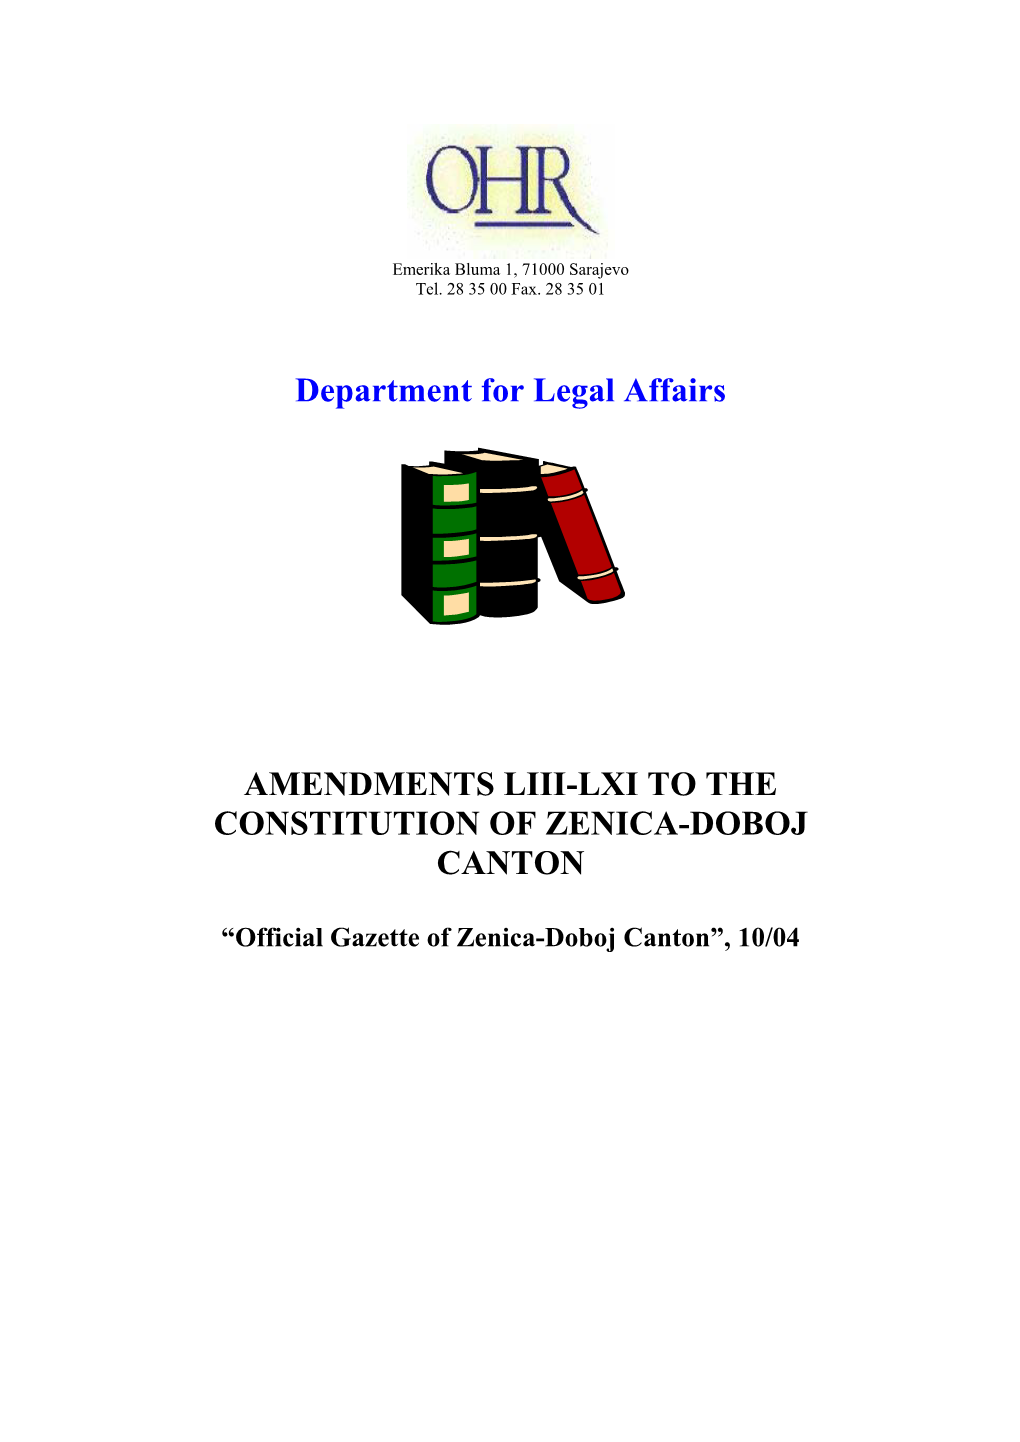 Amendments Liii-Lxi to the Constitution of Zenica-Doboj Canton